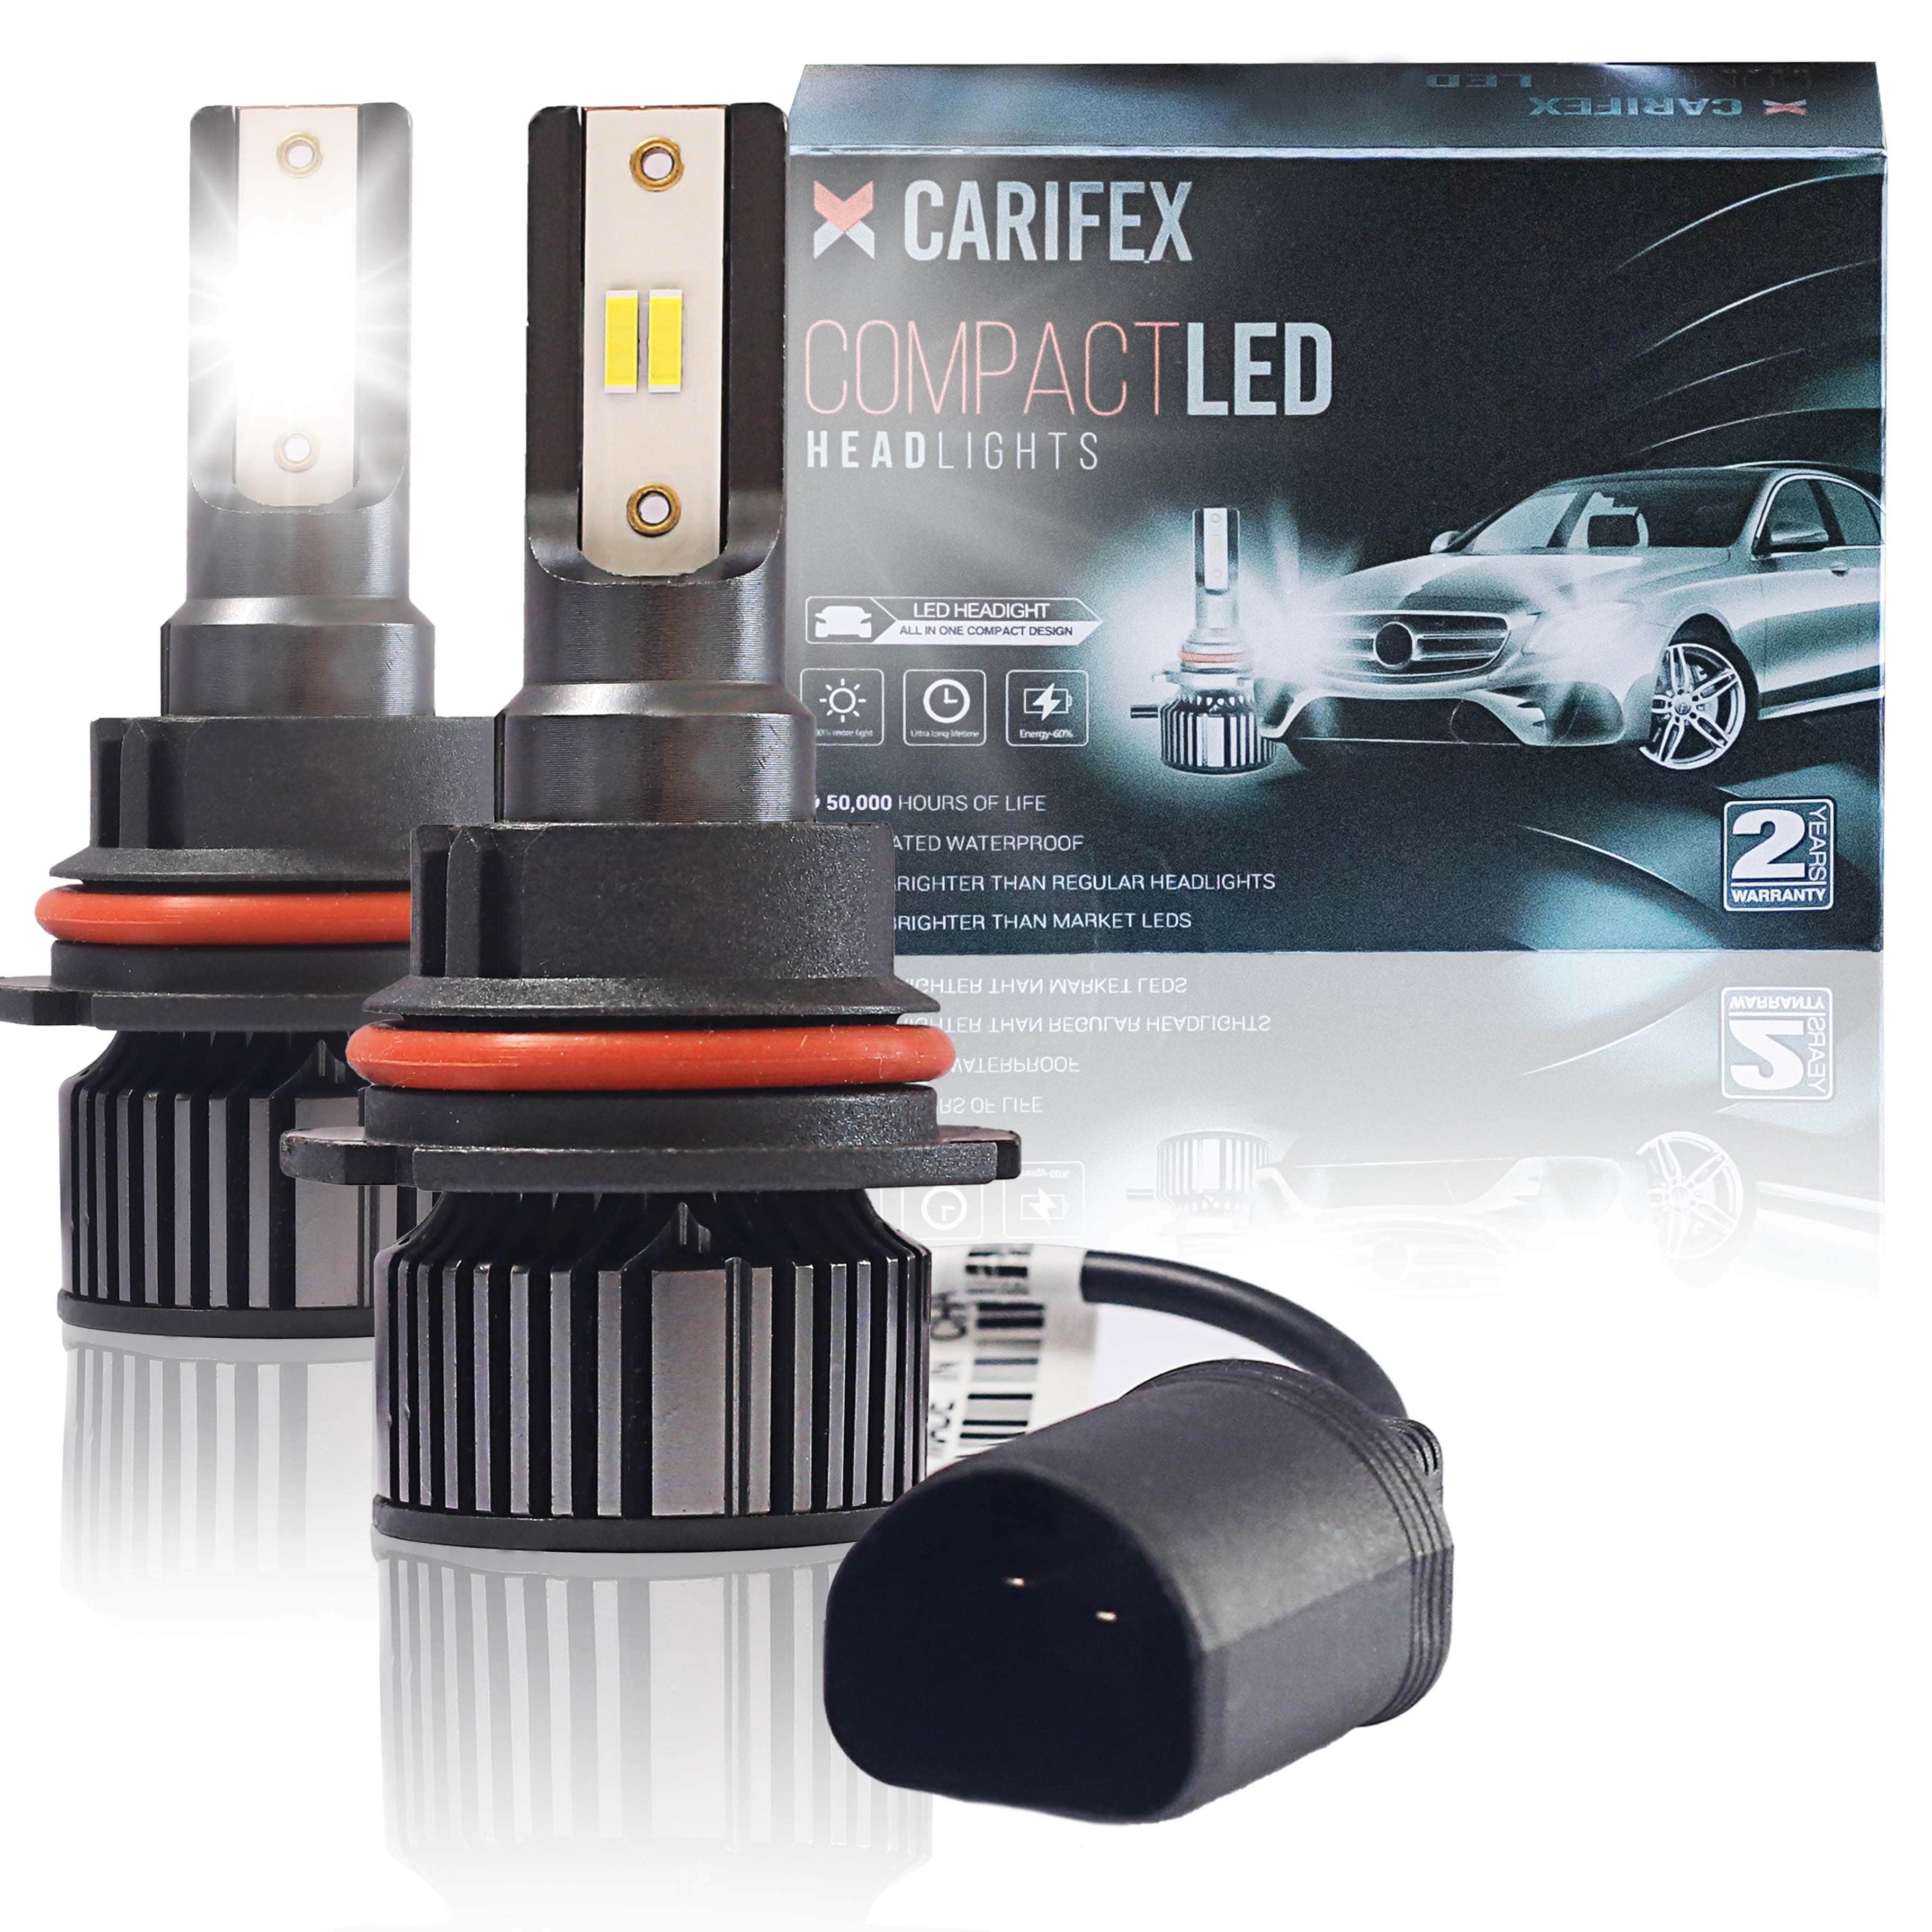 Carifex Compact LED Headlight Compact 9007 LED Headlight Bulbs